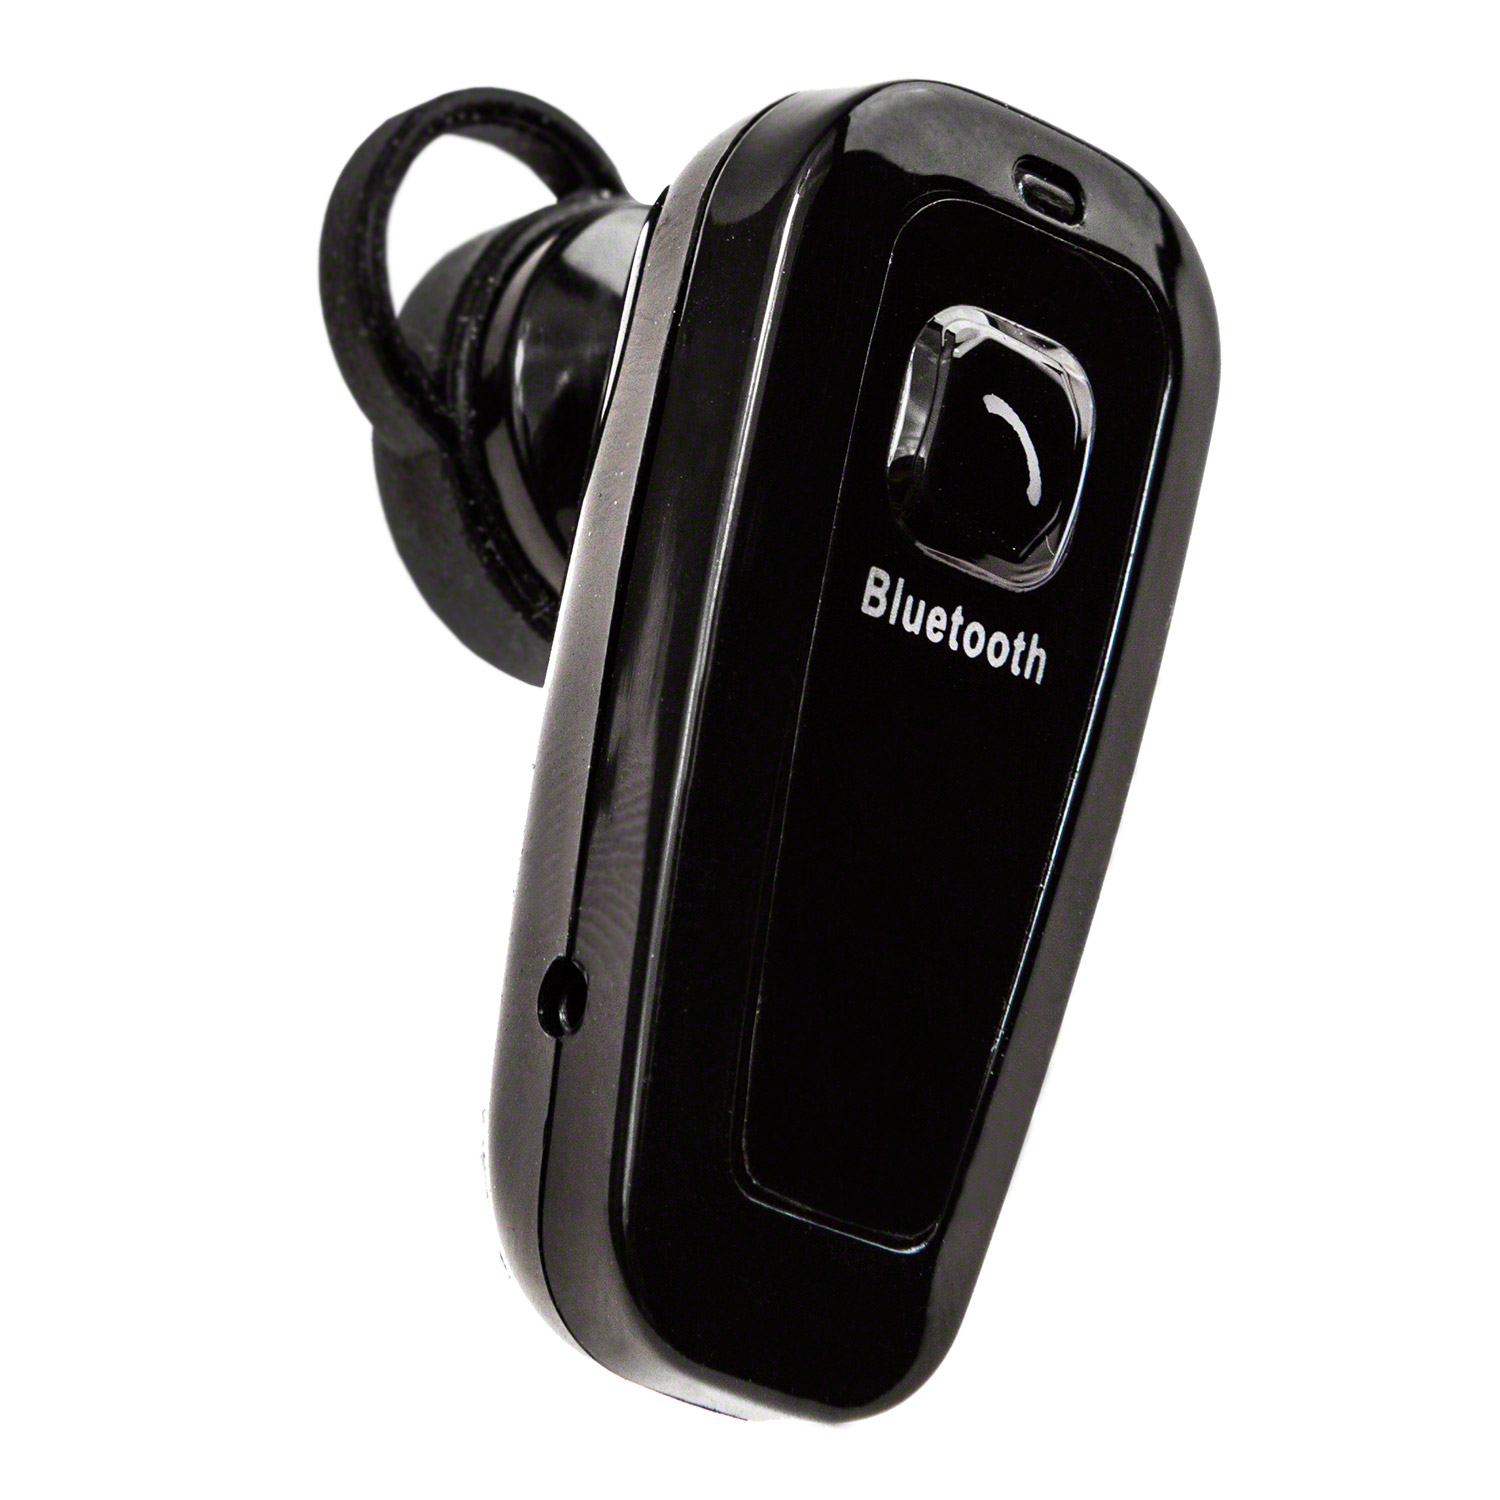 OXO BH-99 Super Value Universal Bluetooth Headset